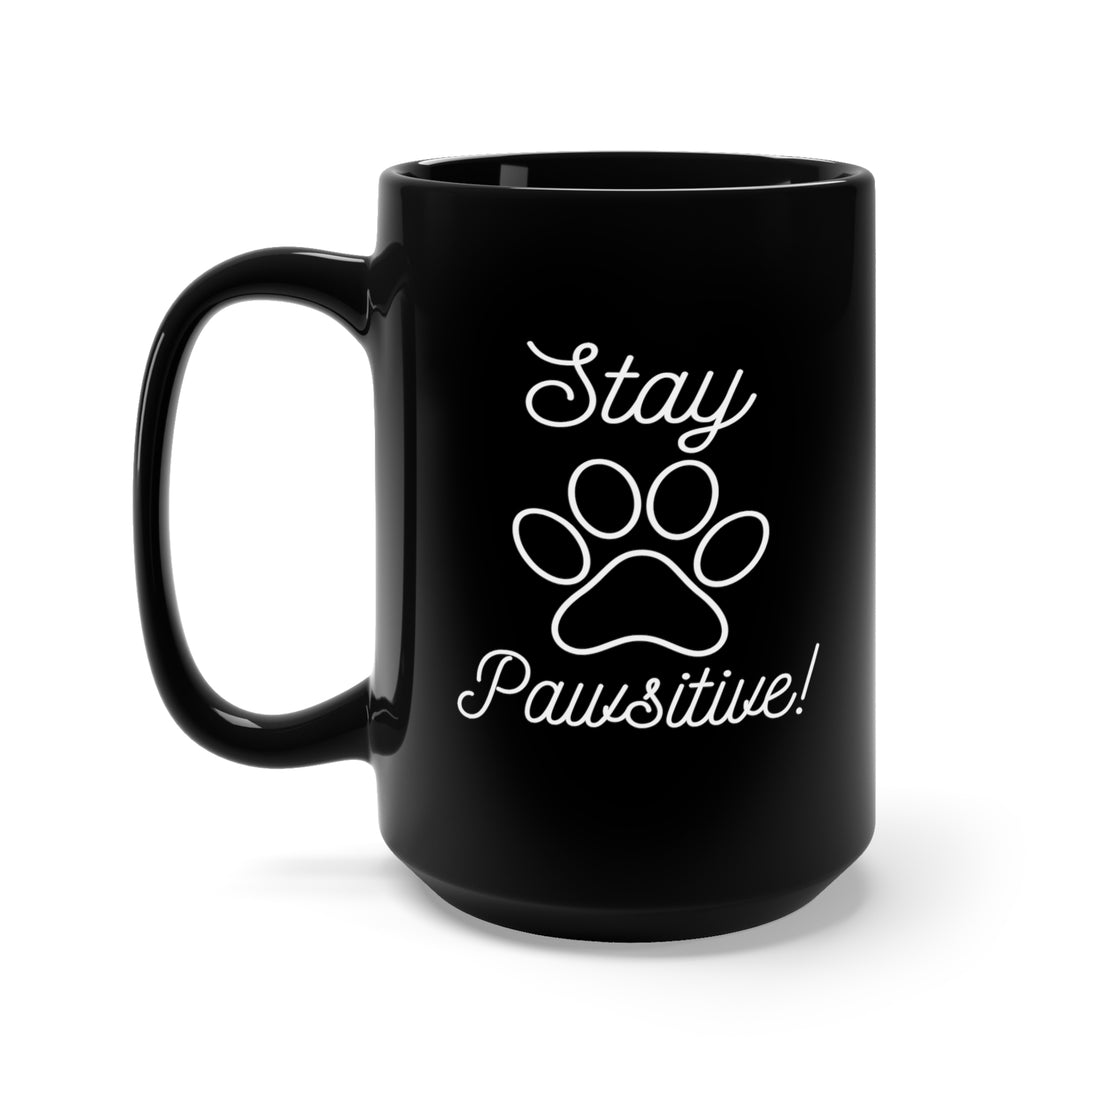 Stay Pawsitive - Large 15oz Black Mug